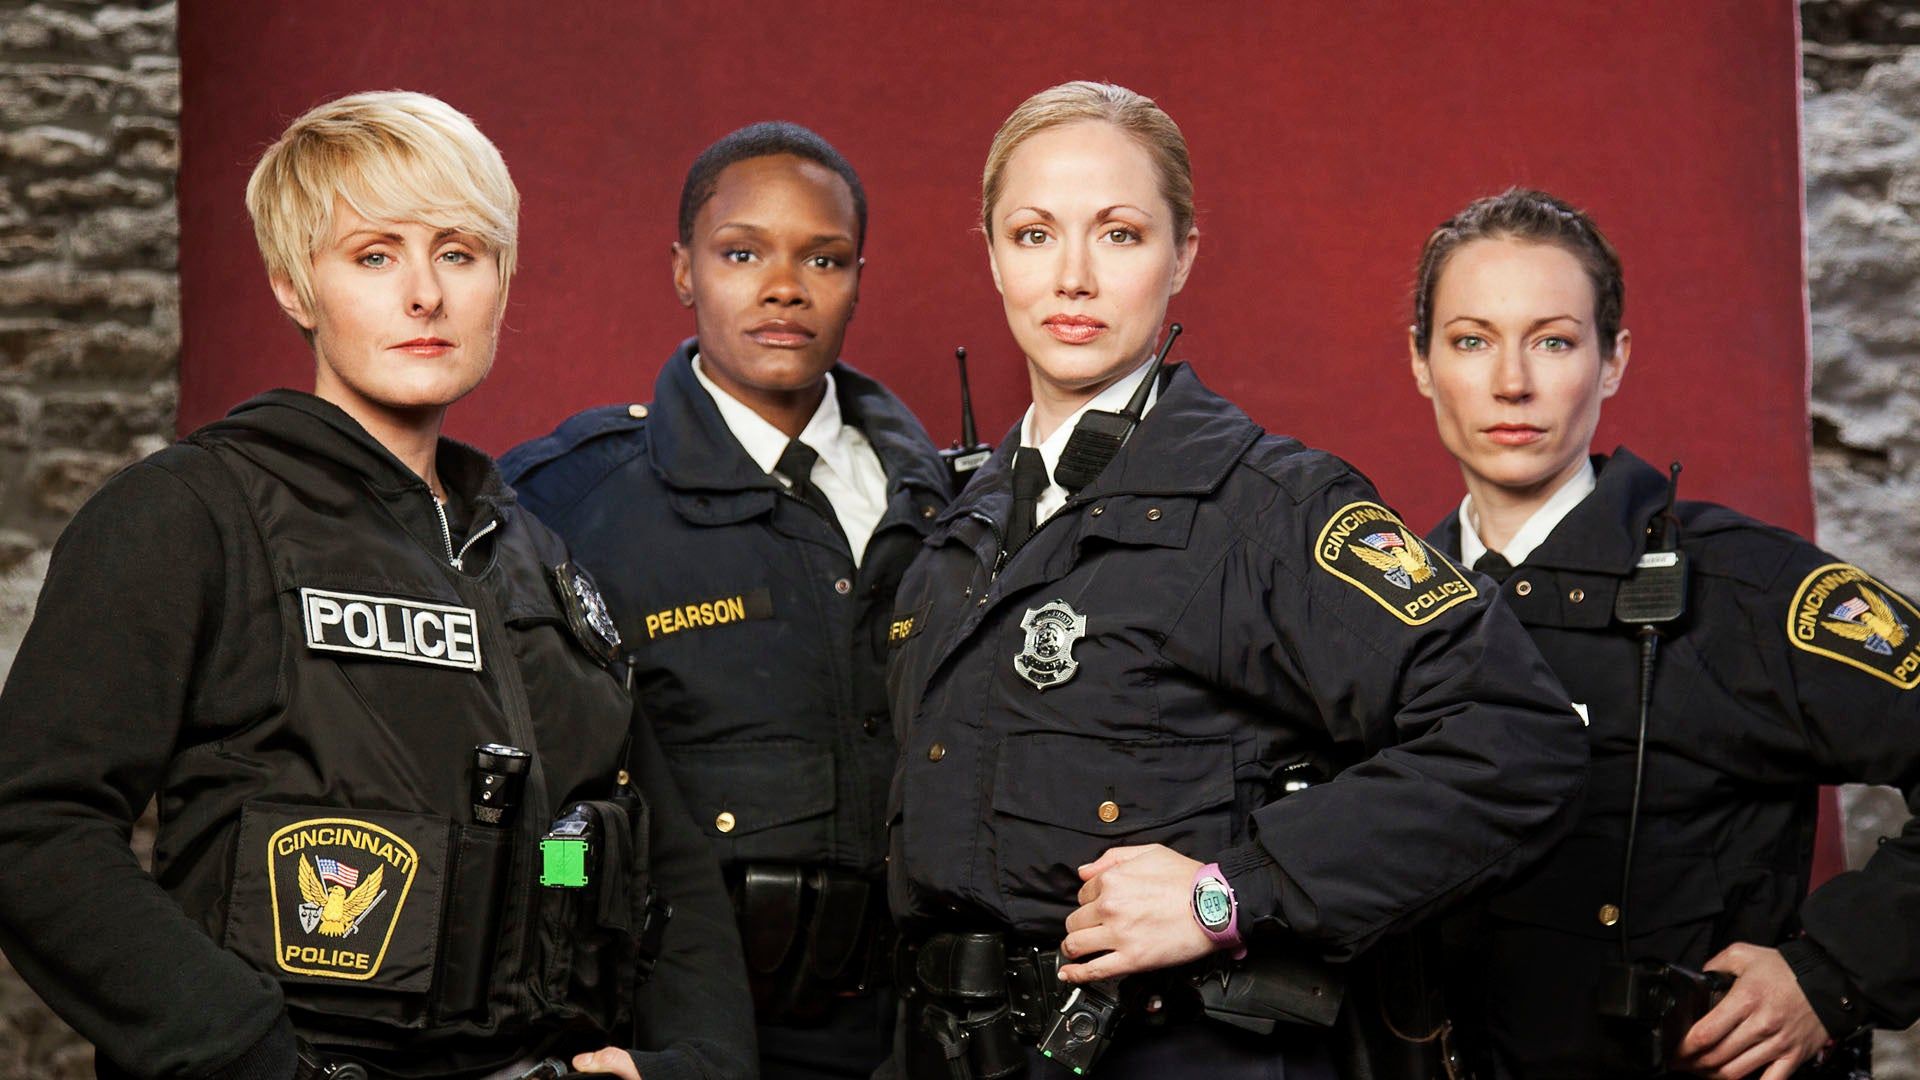 Real Women Of Law Enforcement